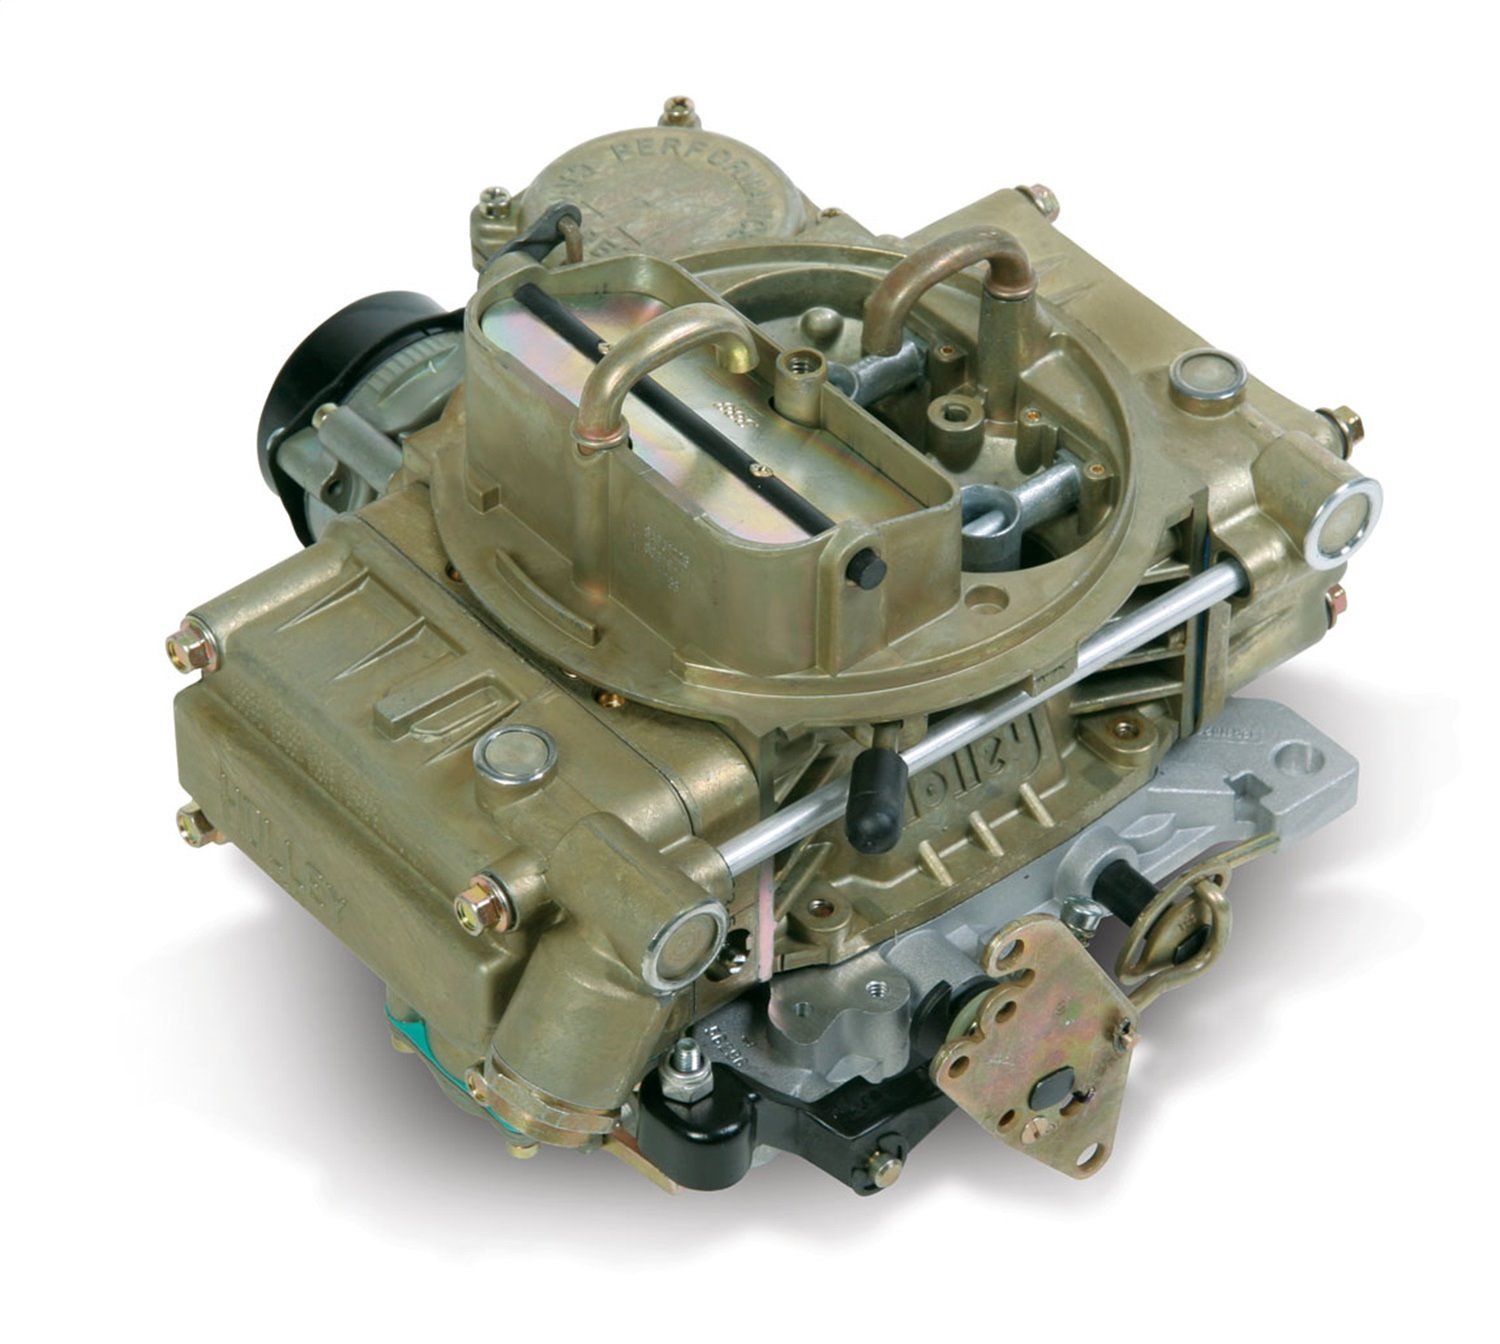 0-80319-2 Marine 600 cfm 4-bbl Carburetor w/Calibration for Ford Small Block 351 ci. (5.8L) Marine Engines